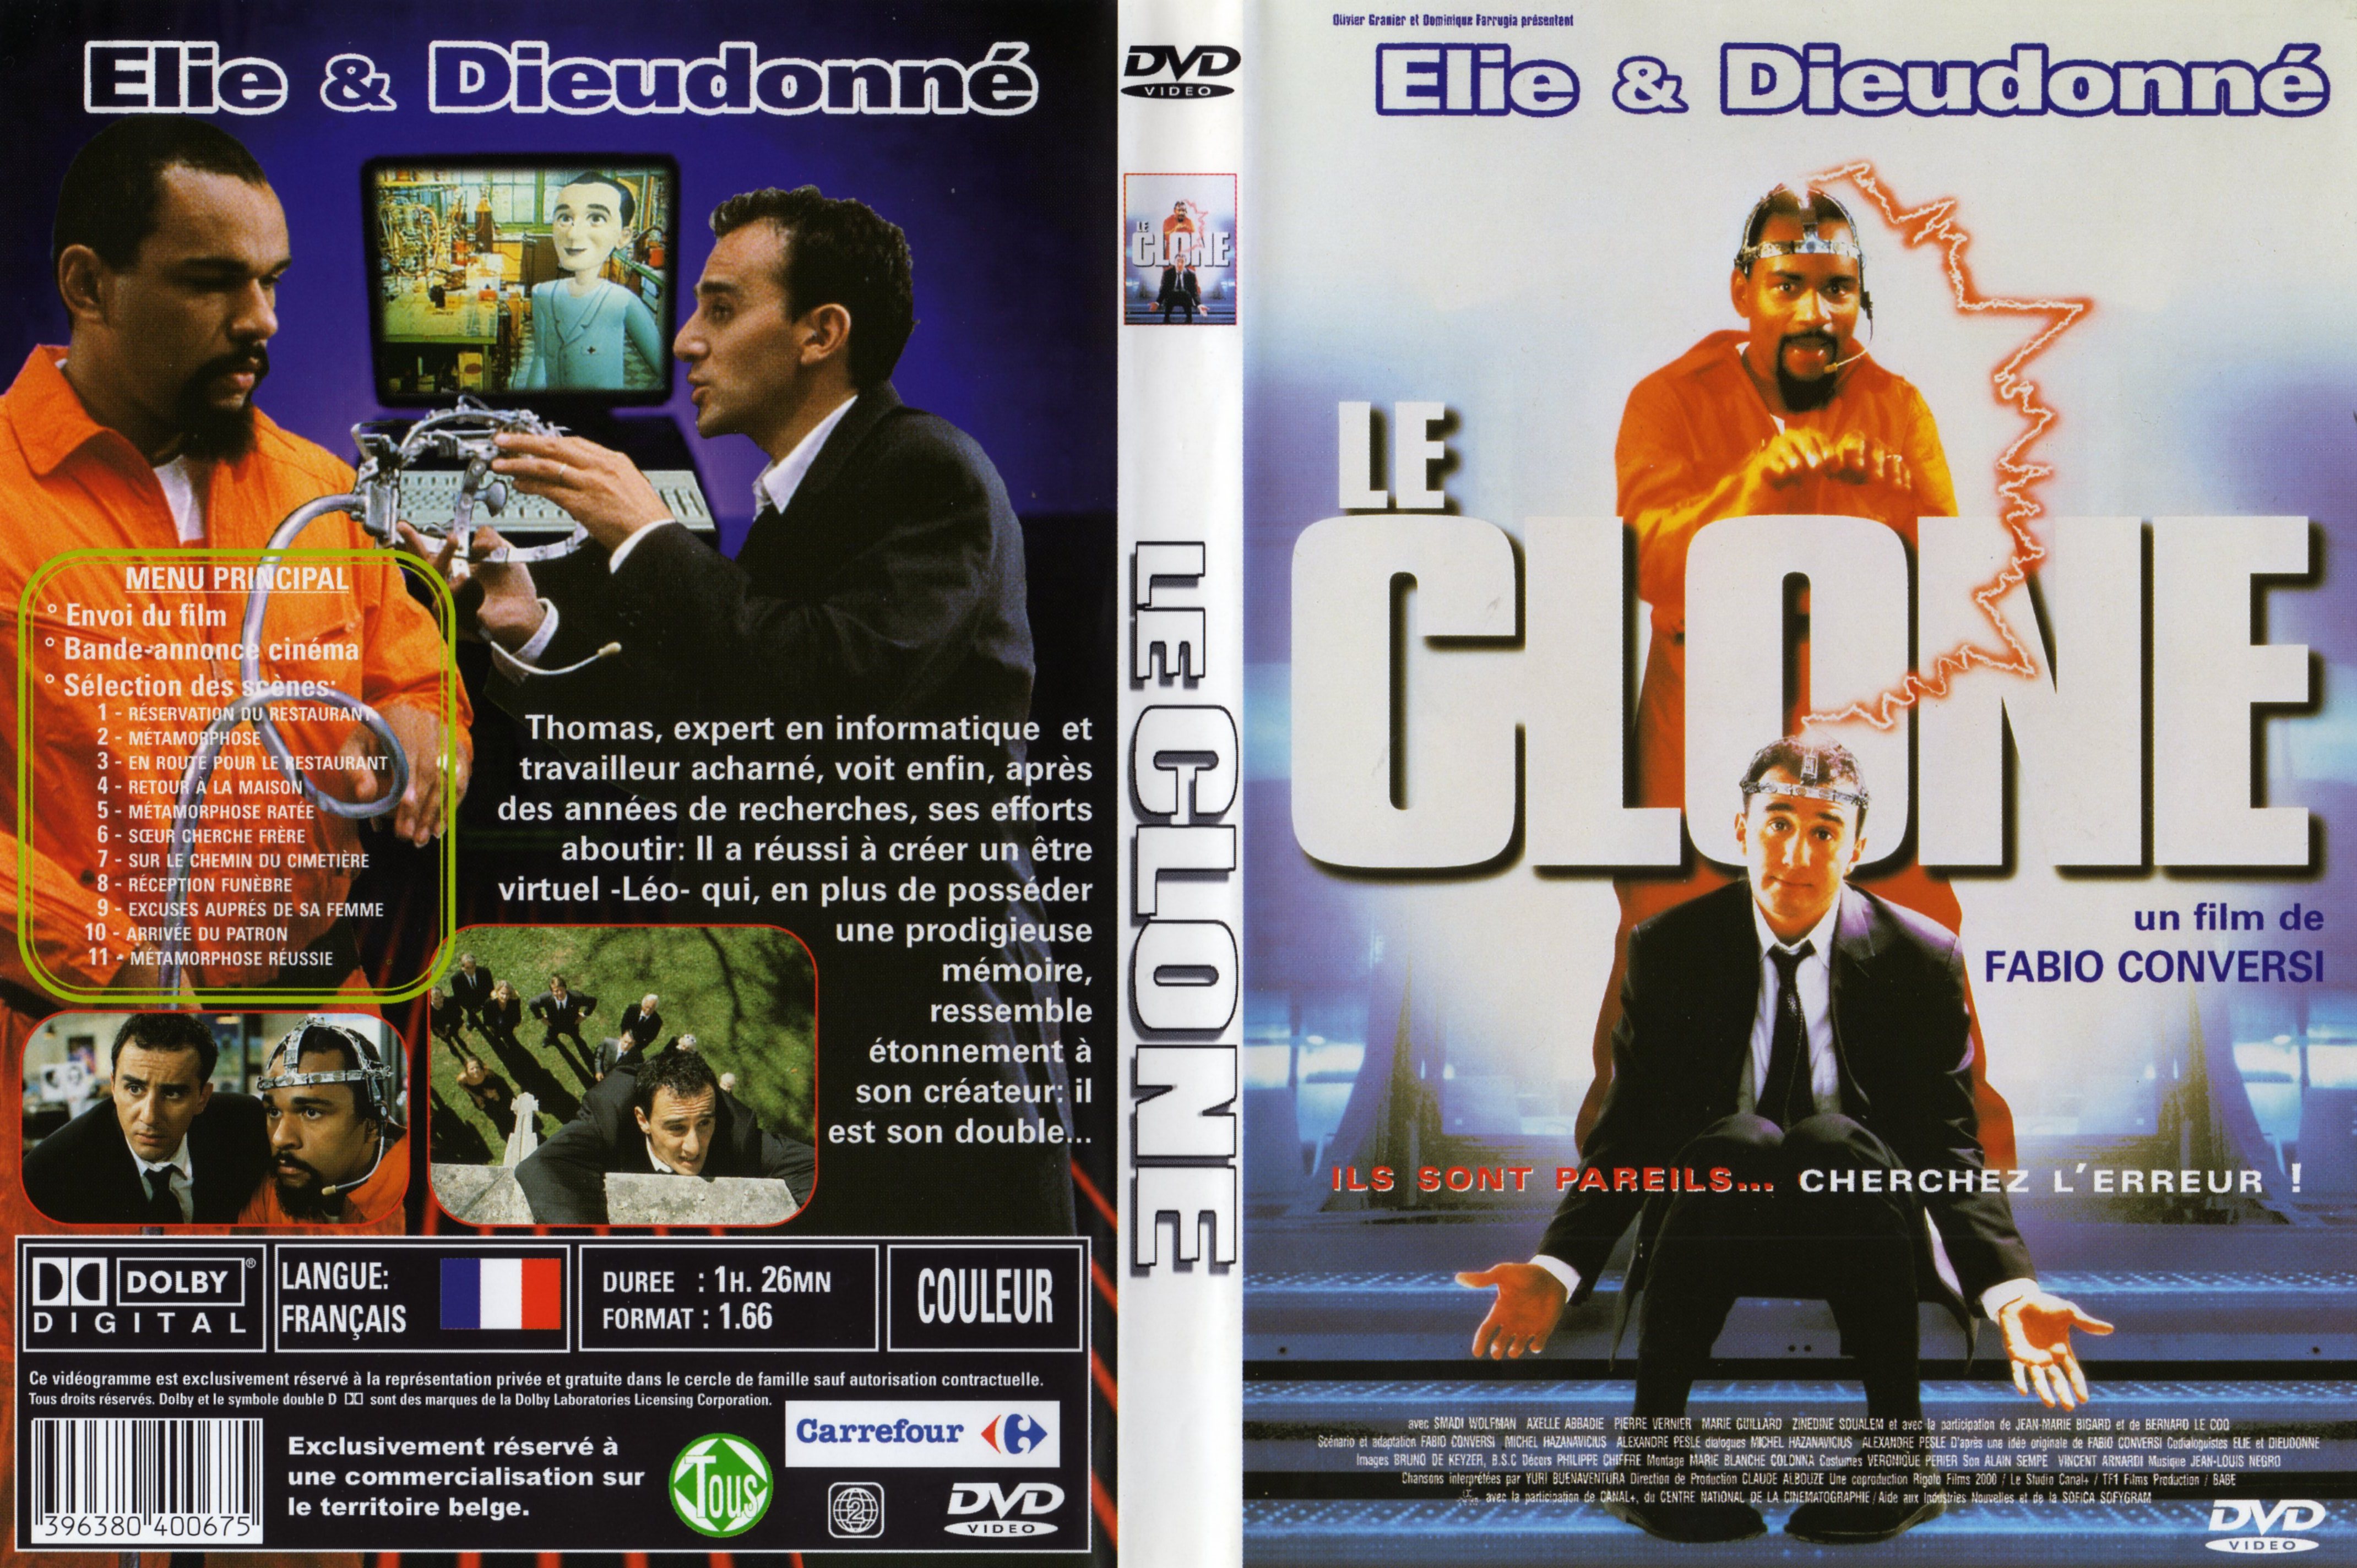 Jaquette DVD Le clone